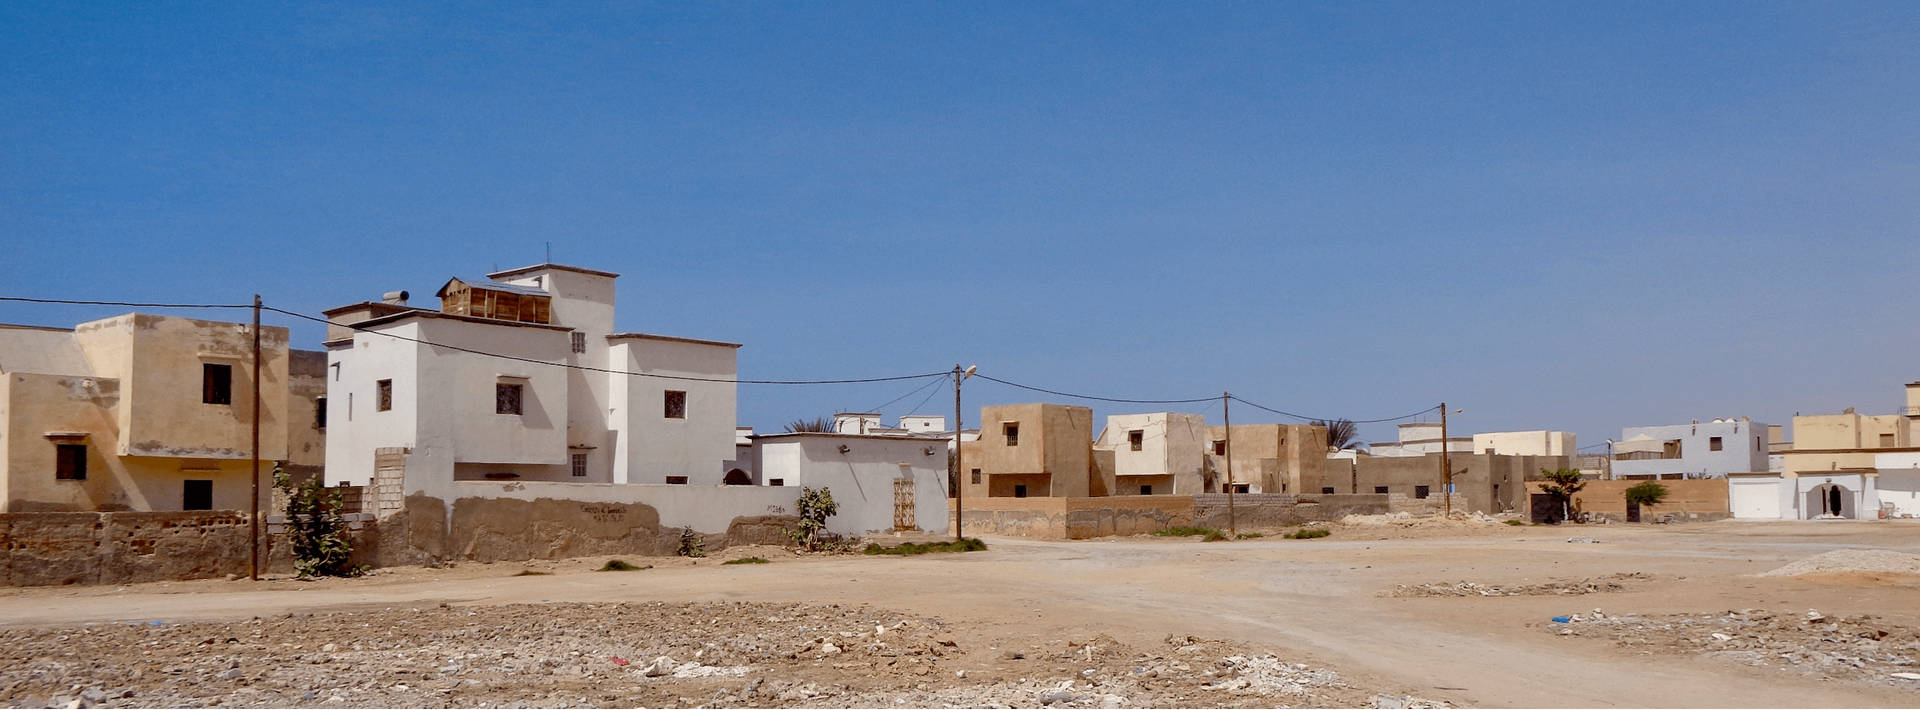 Houses In Nouakchott, Mauritania Wallpaper